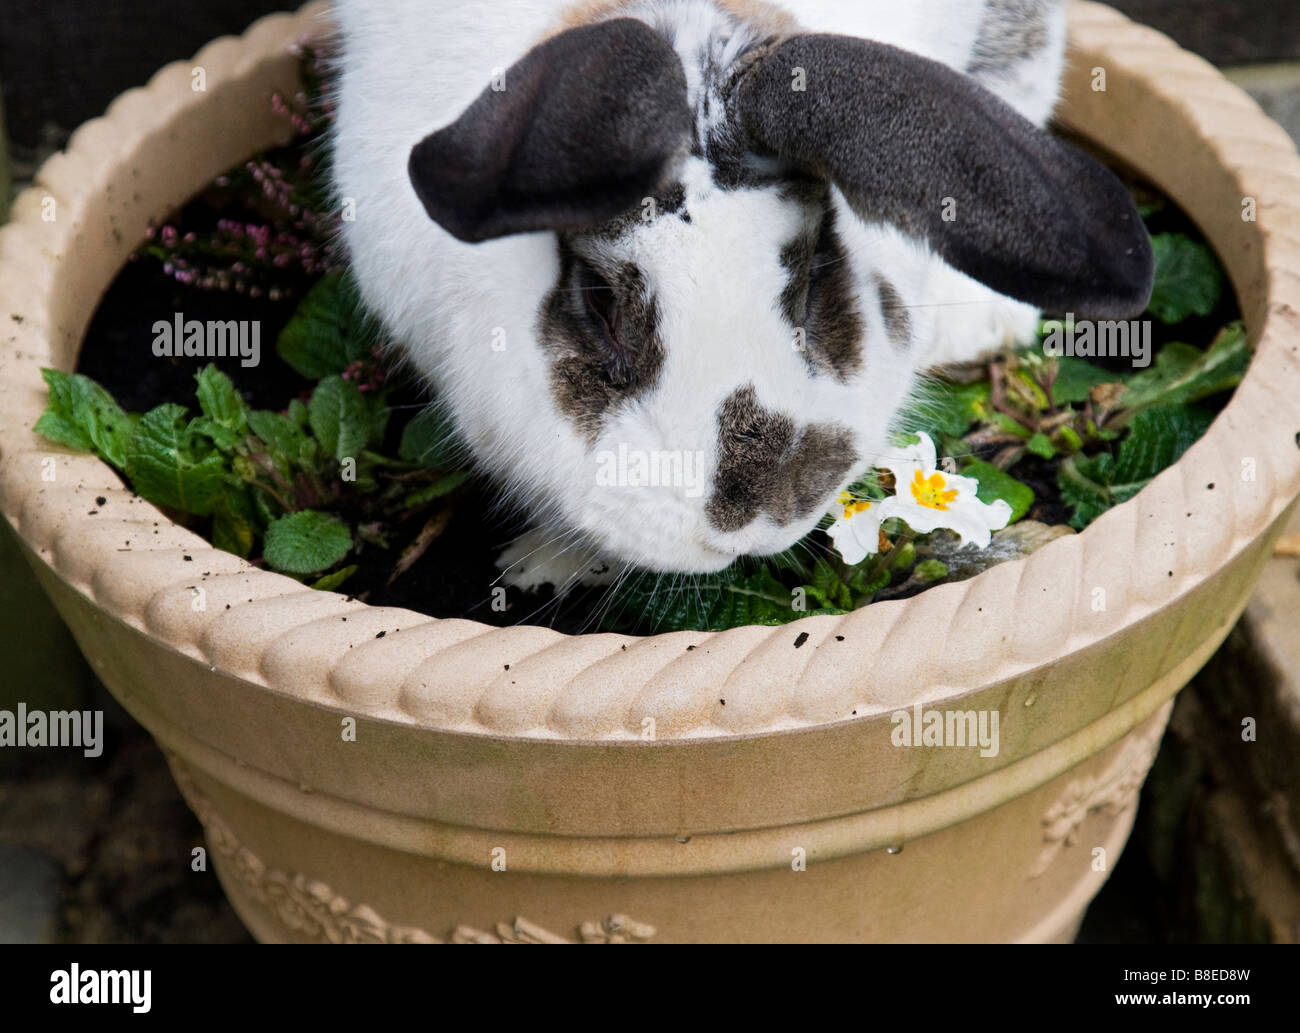 British giant rabbit stealing plants Stock Photo